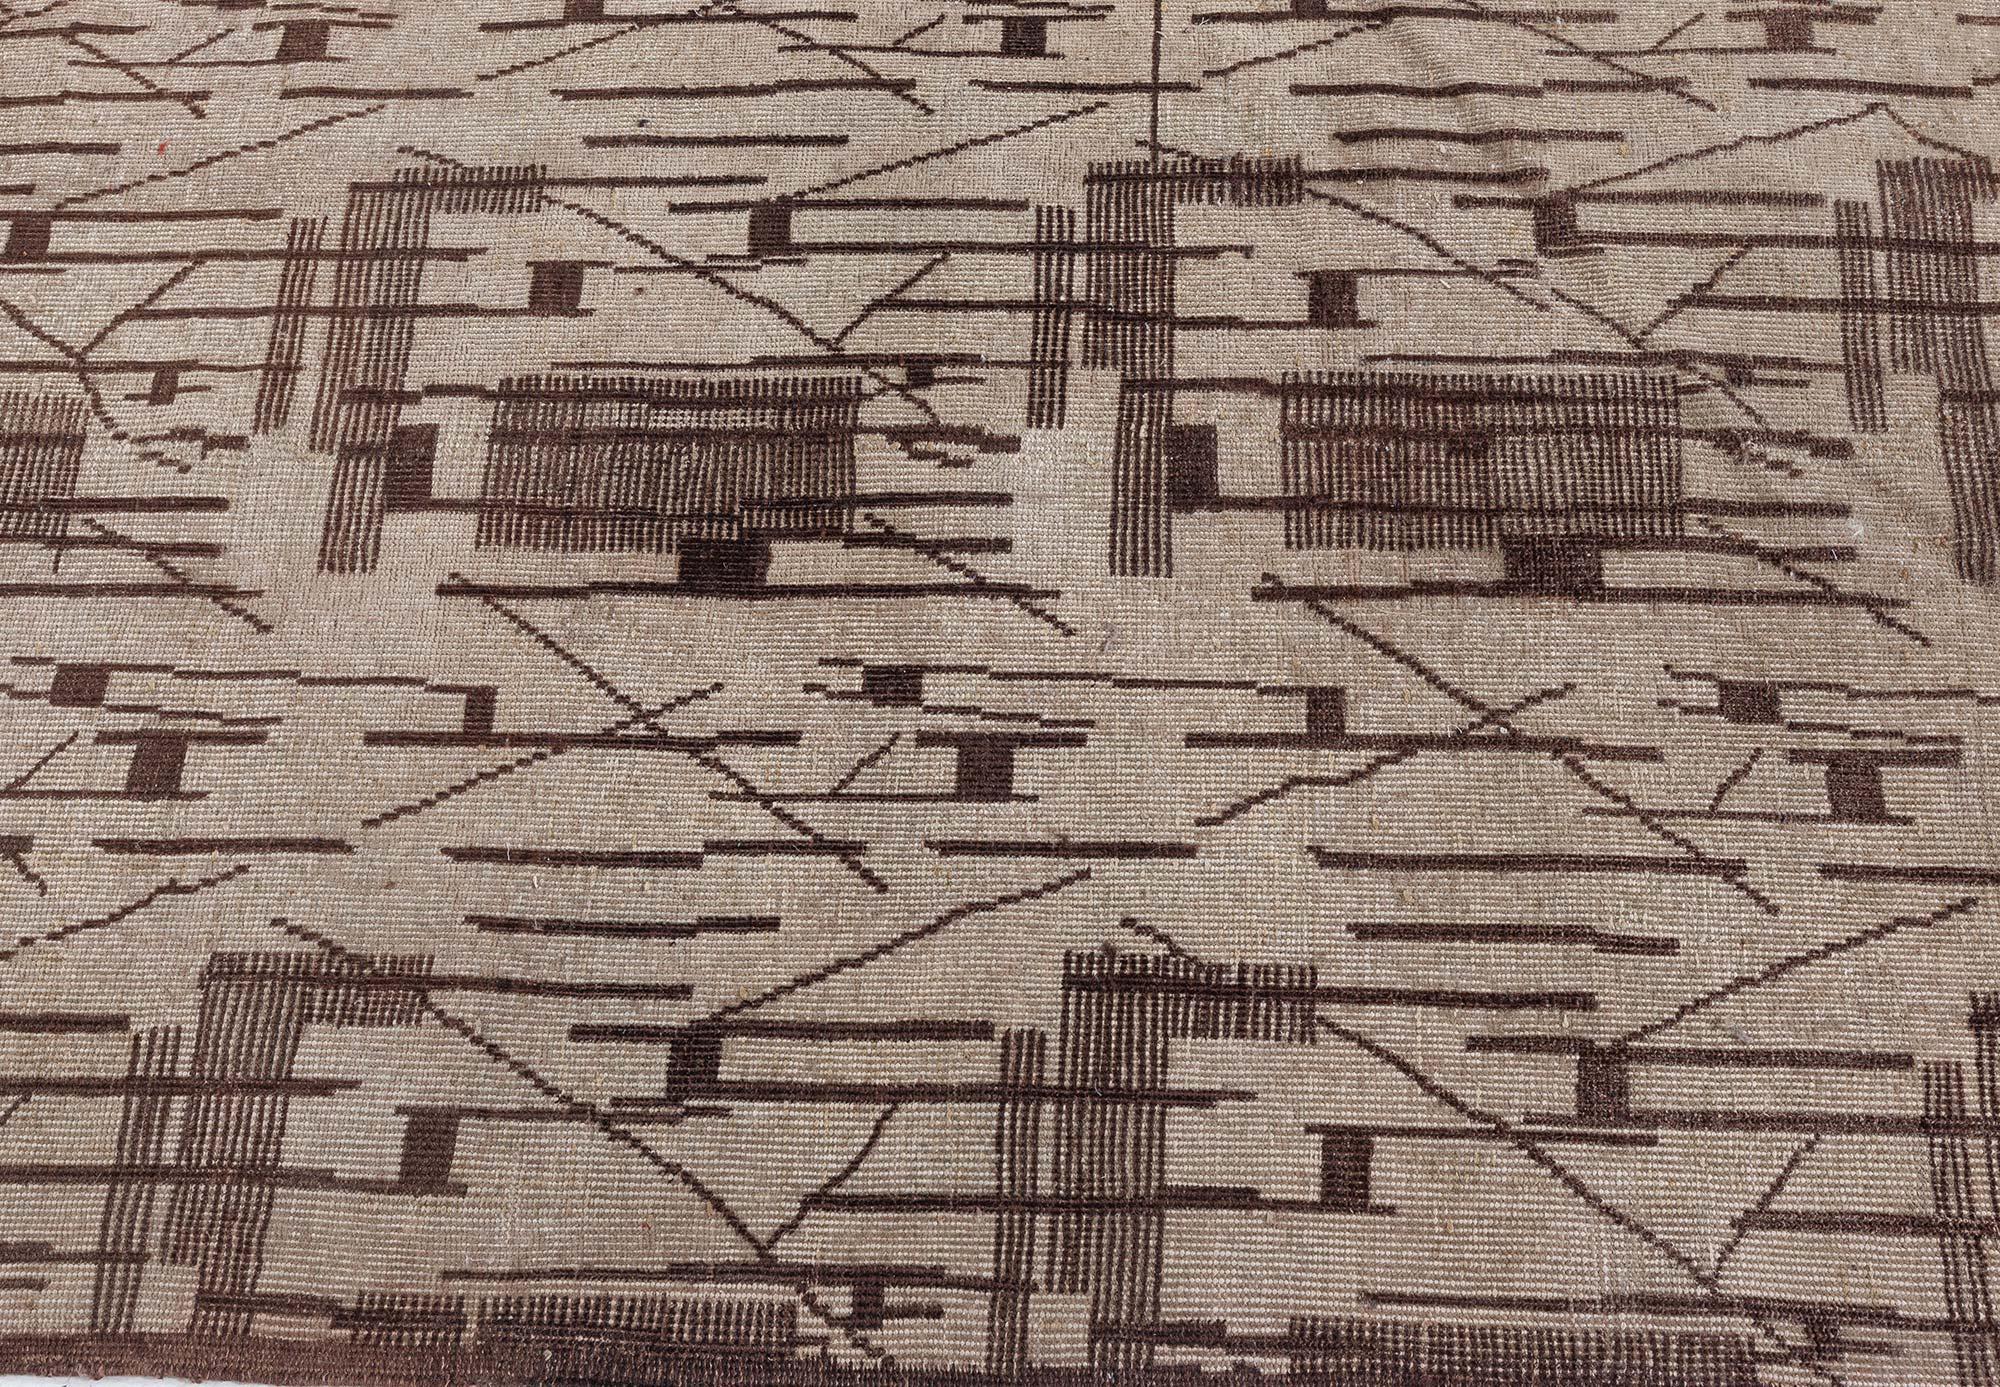 Mid-20th century geometric European rug
Size: 7'0